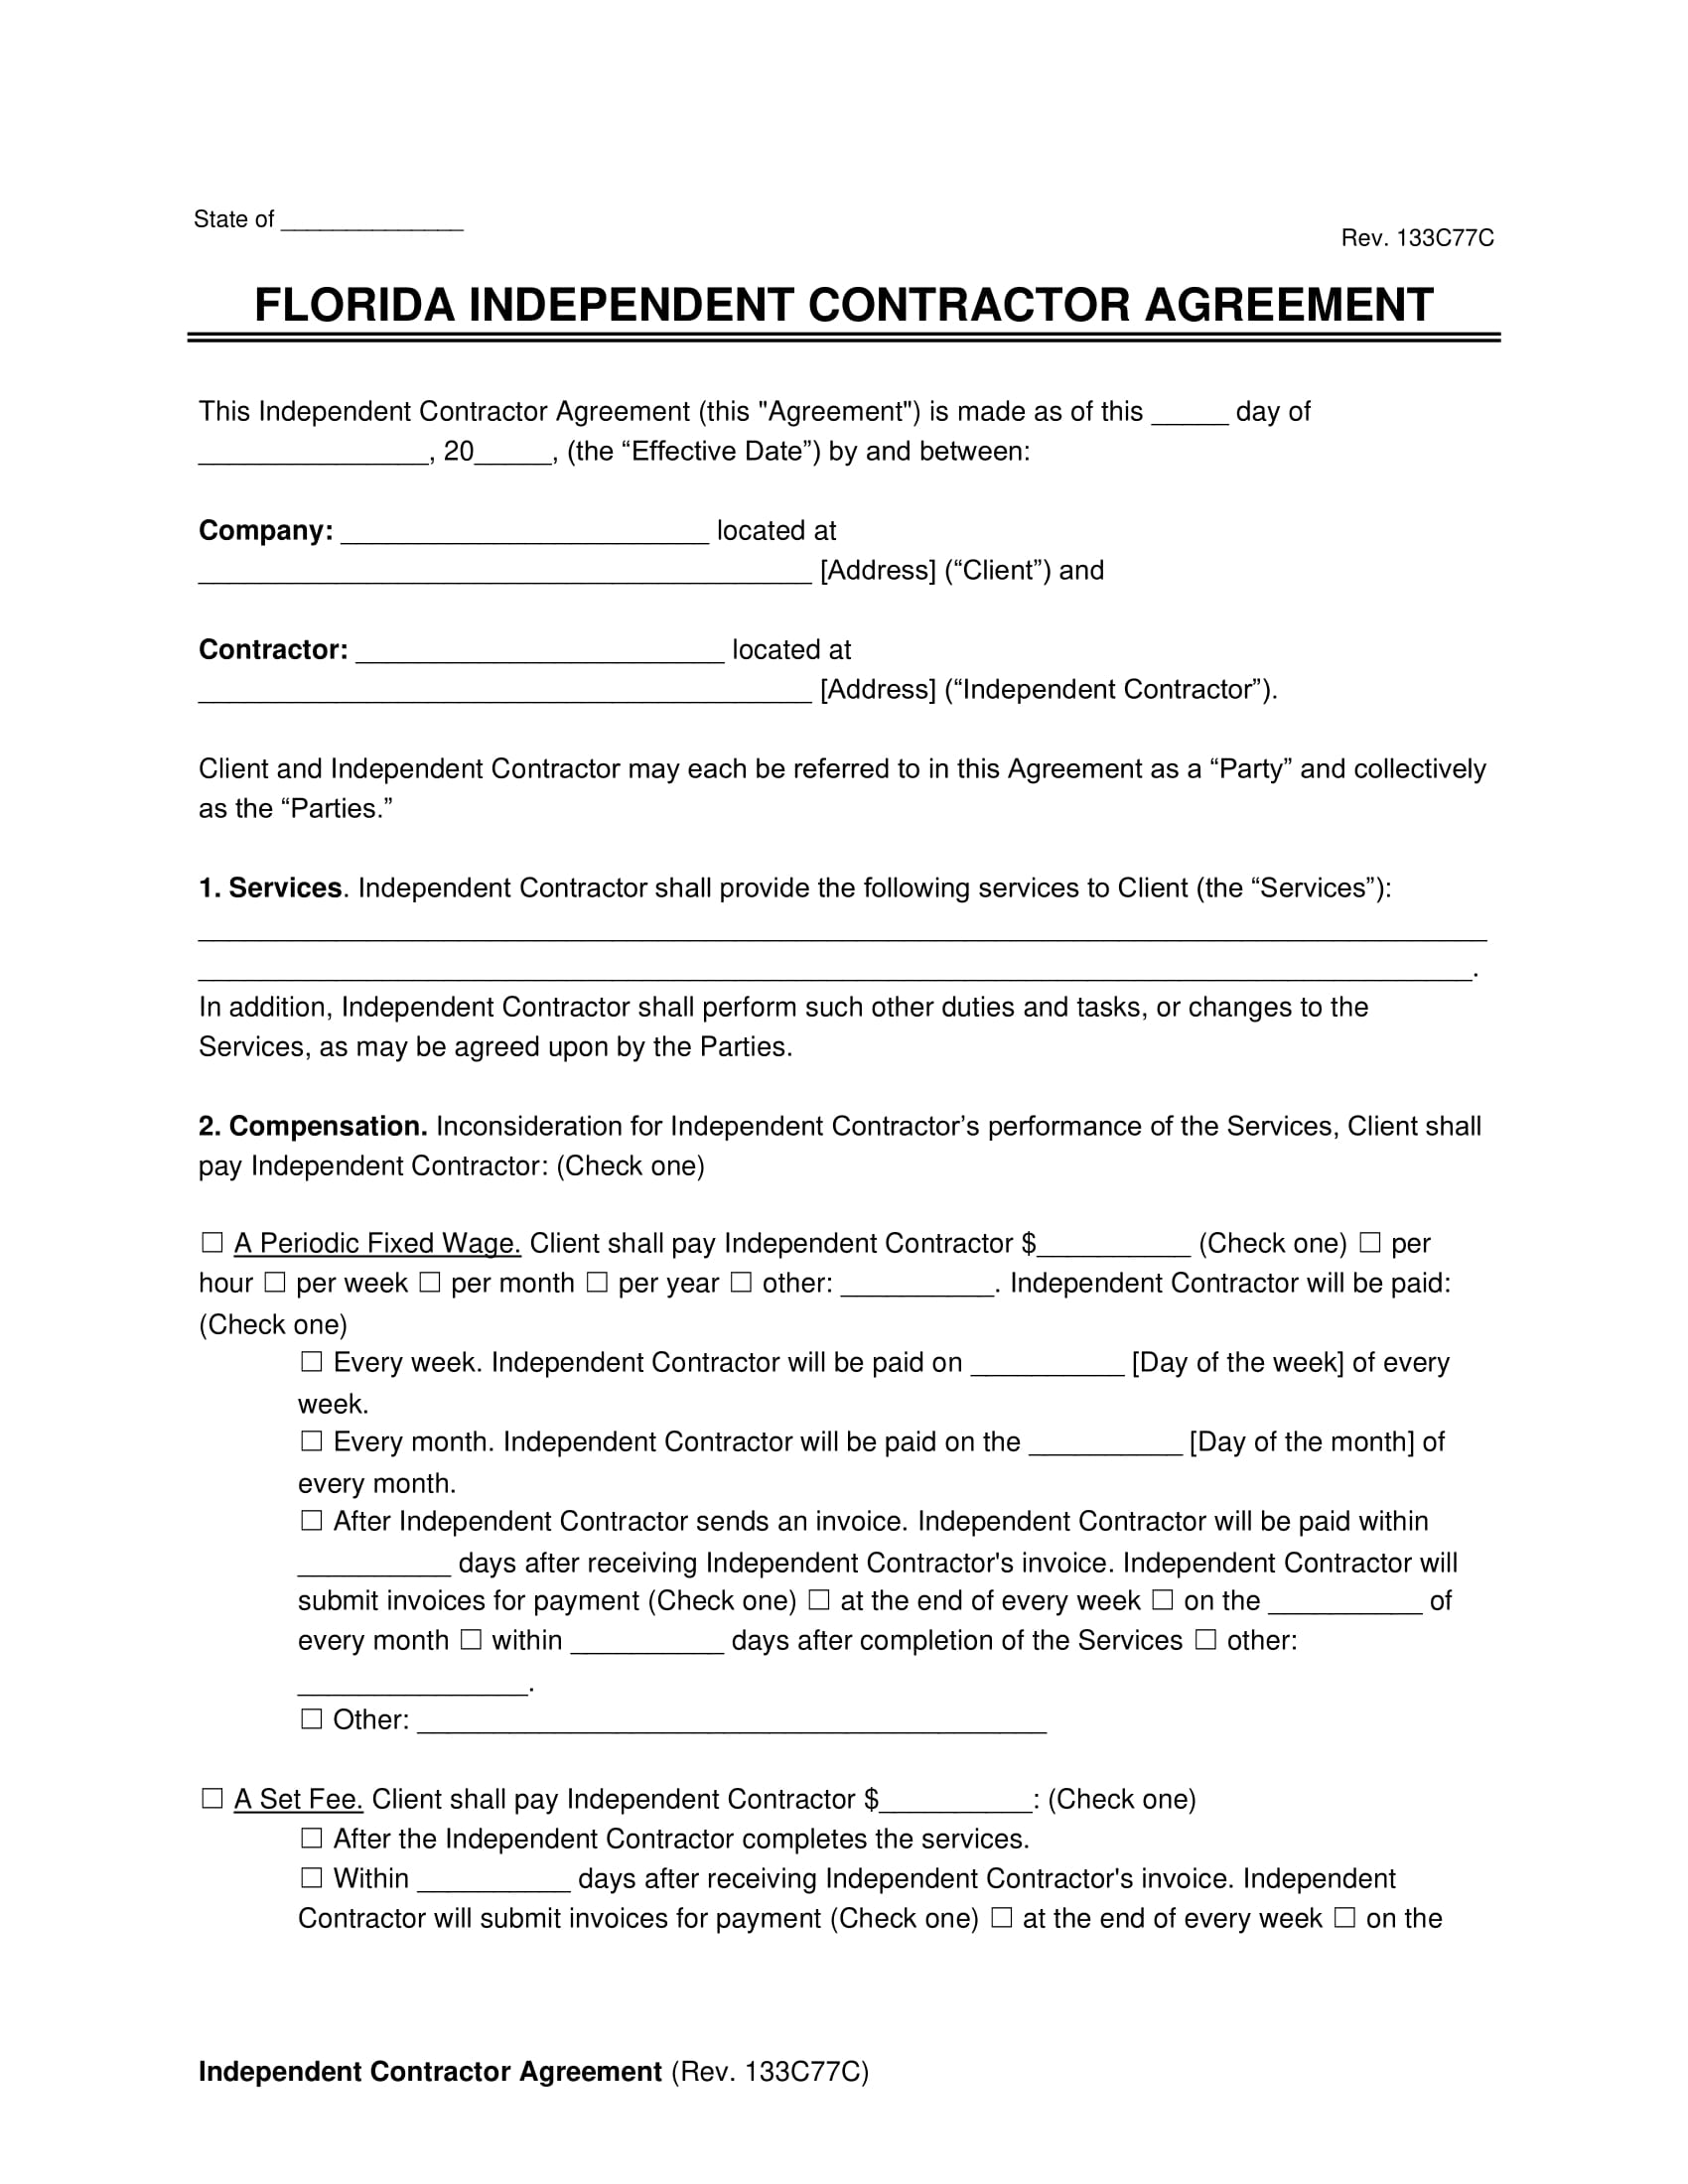 florida independent contractor agreement screenshot